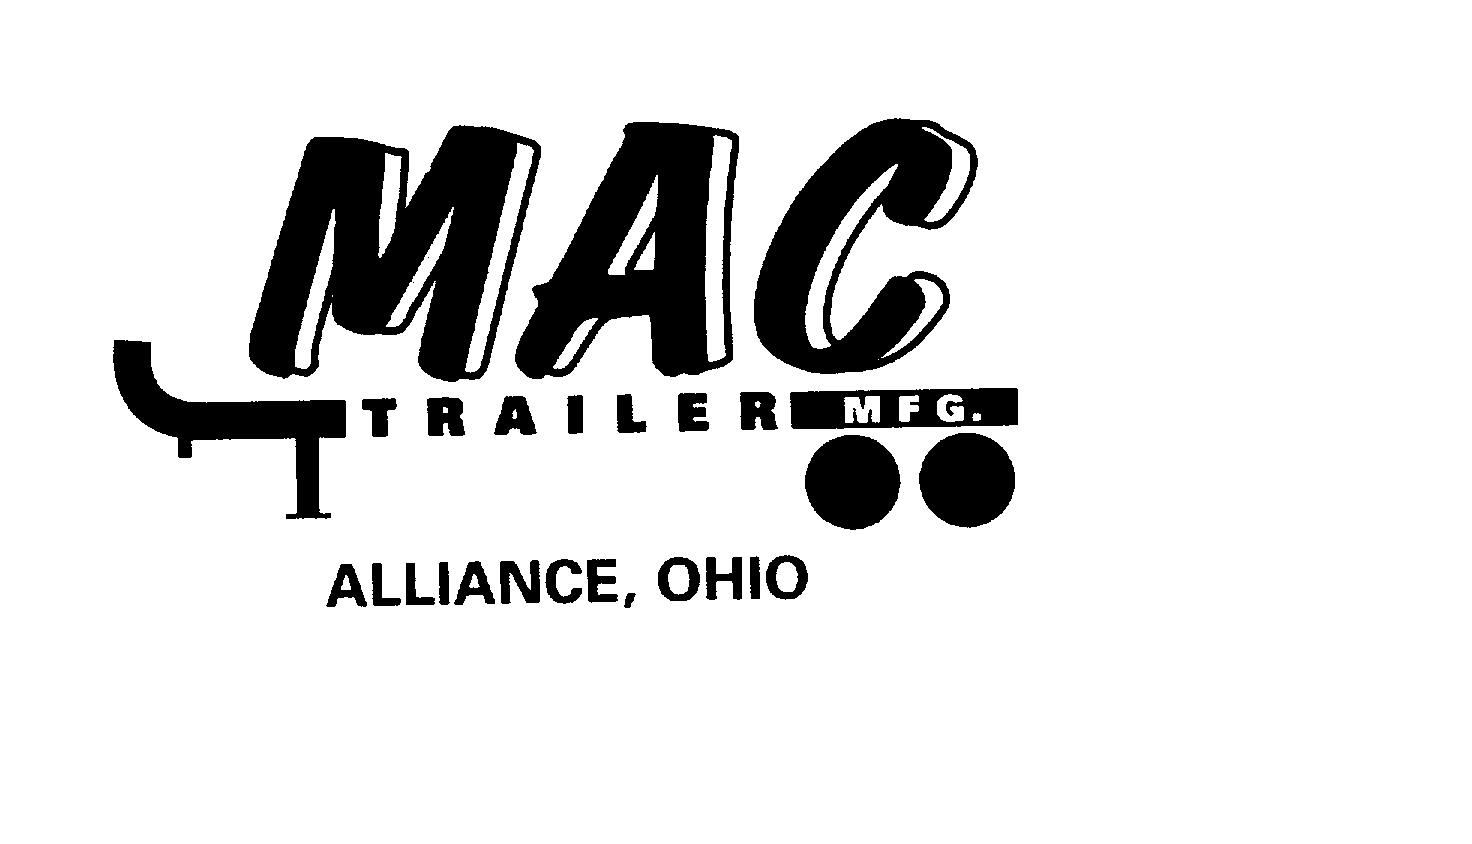  MAC TRAILER MFG. ALLIANCE, OHIO